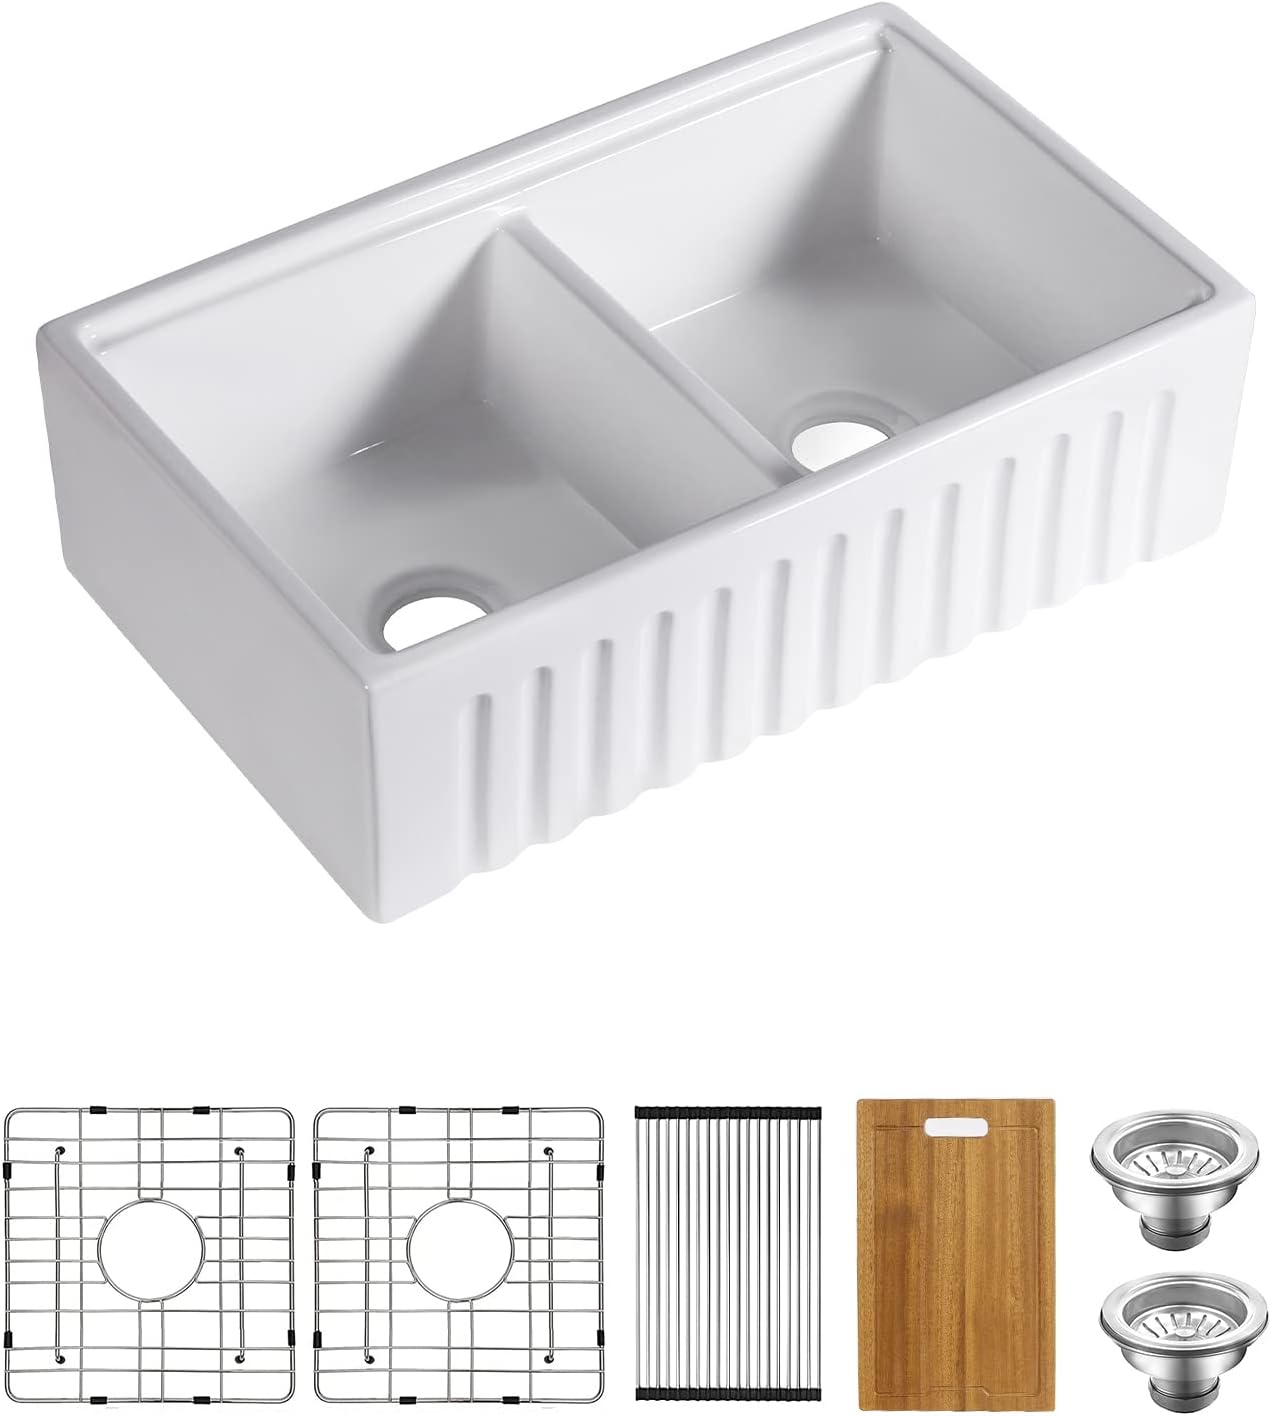 33" x 20" x 10" Double Bowl White Farmhouse Sink, Porcelain Fireclay Ceramic Apron-Front Kitchen Sink, Farm Sink with various accessories